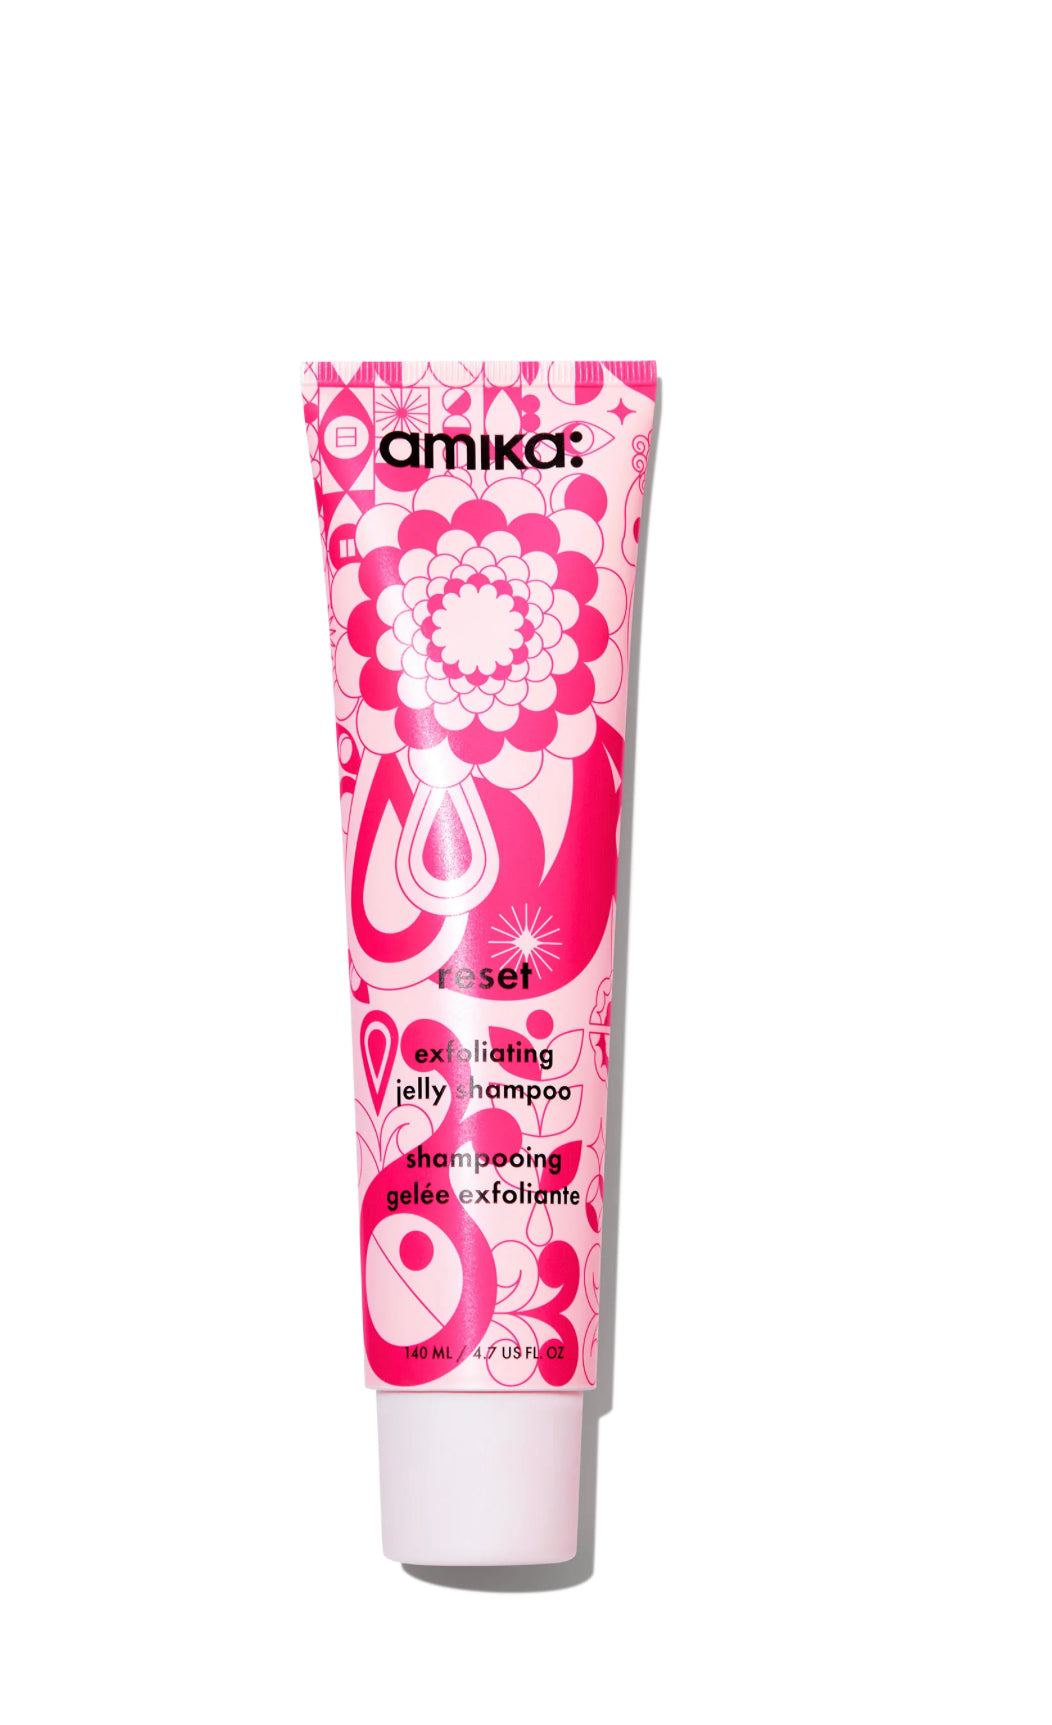 AMIKA RESET Exfoliating Jelly Shampoo